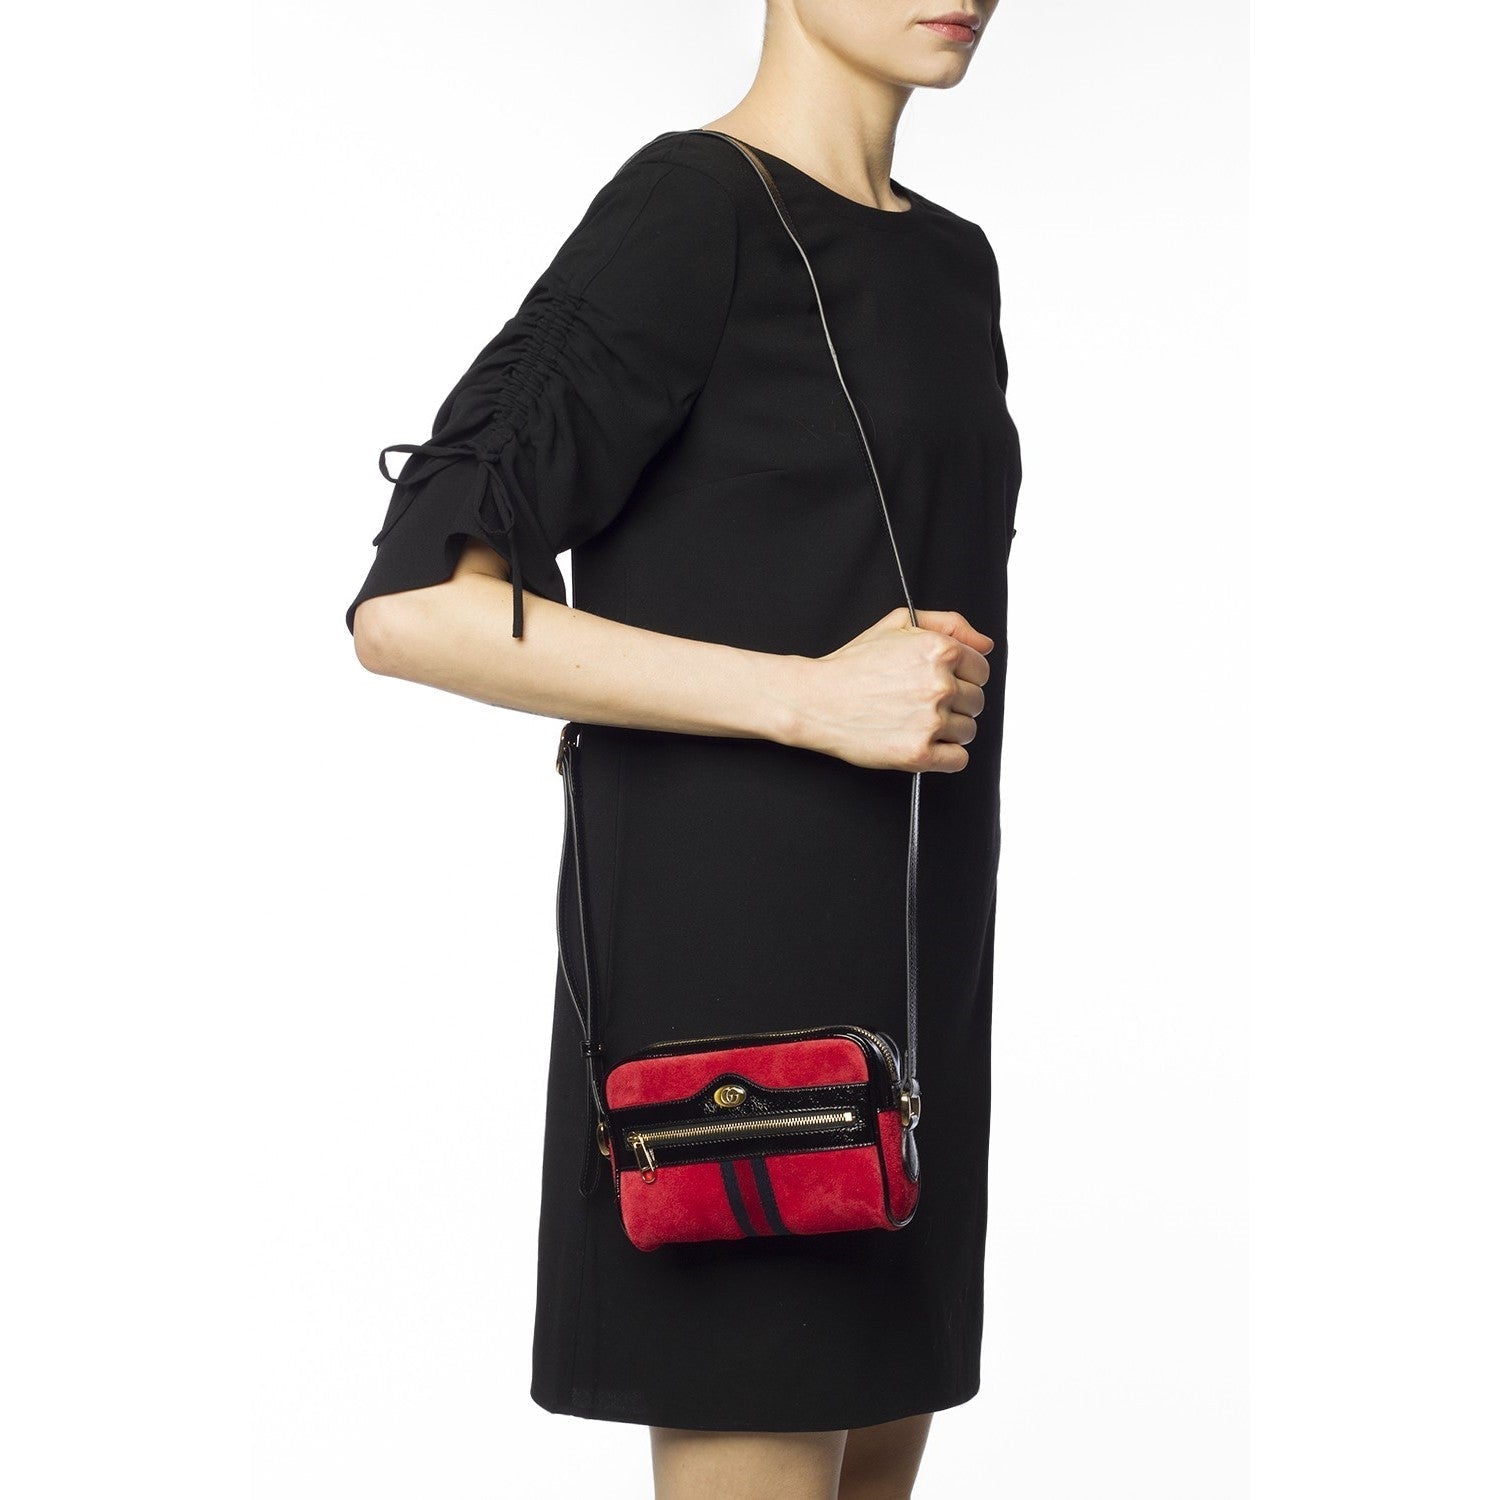 Gucci Ophidia Red Suede Patent Web Mini Shoulder Bag